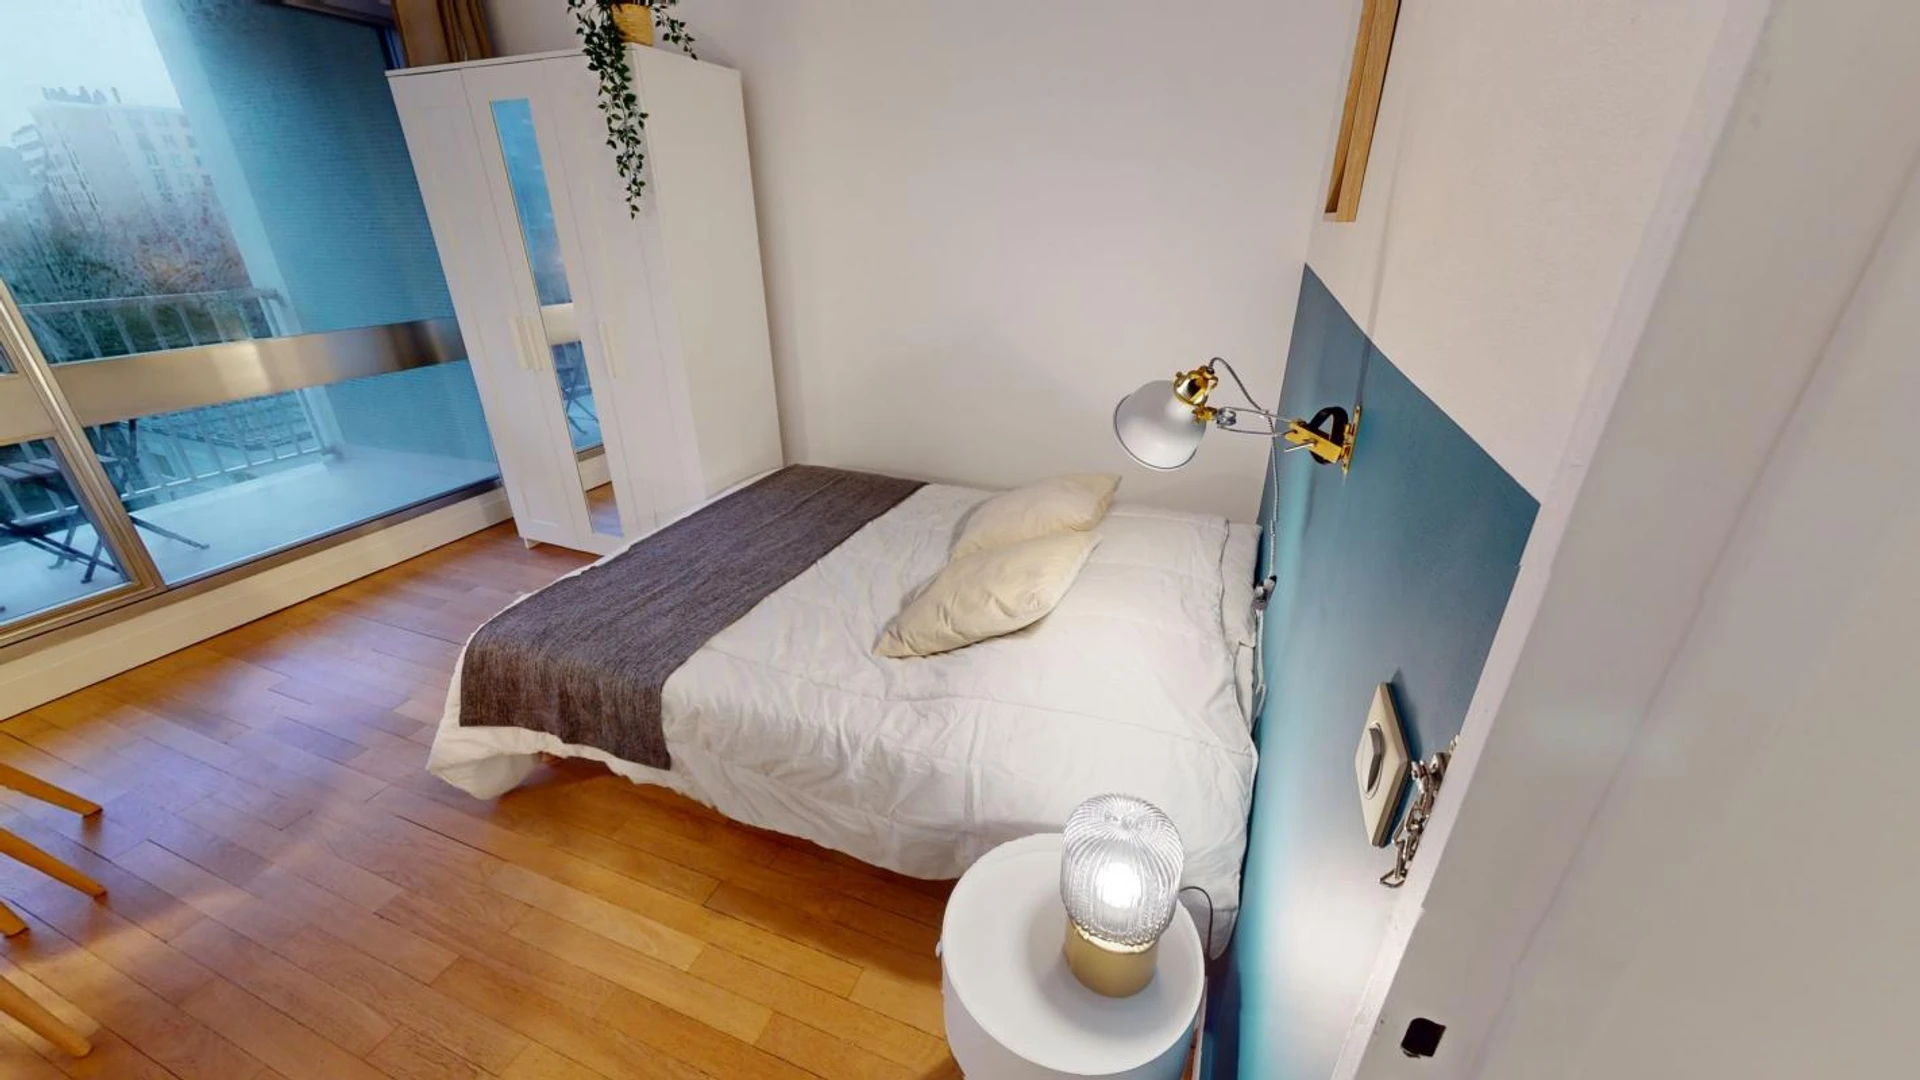 Cheap private room in Boulogne-billancourt